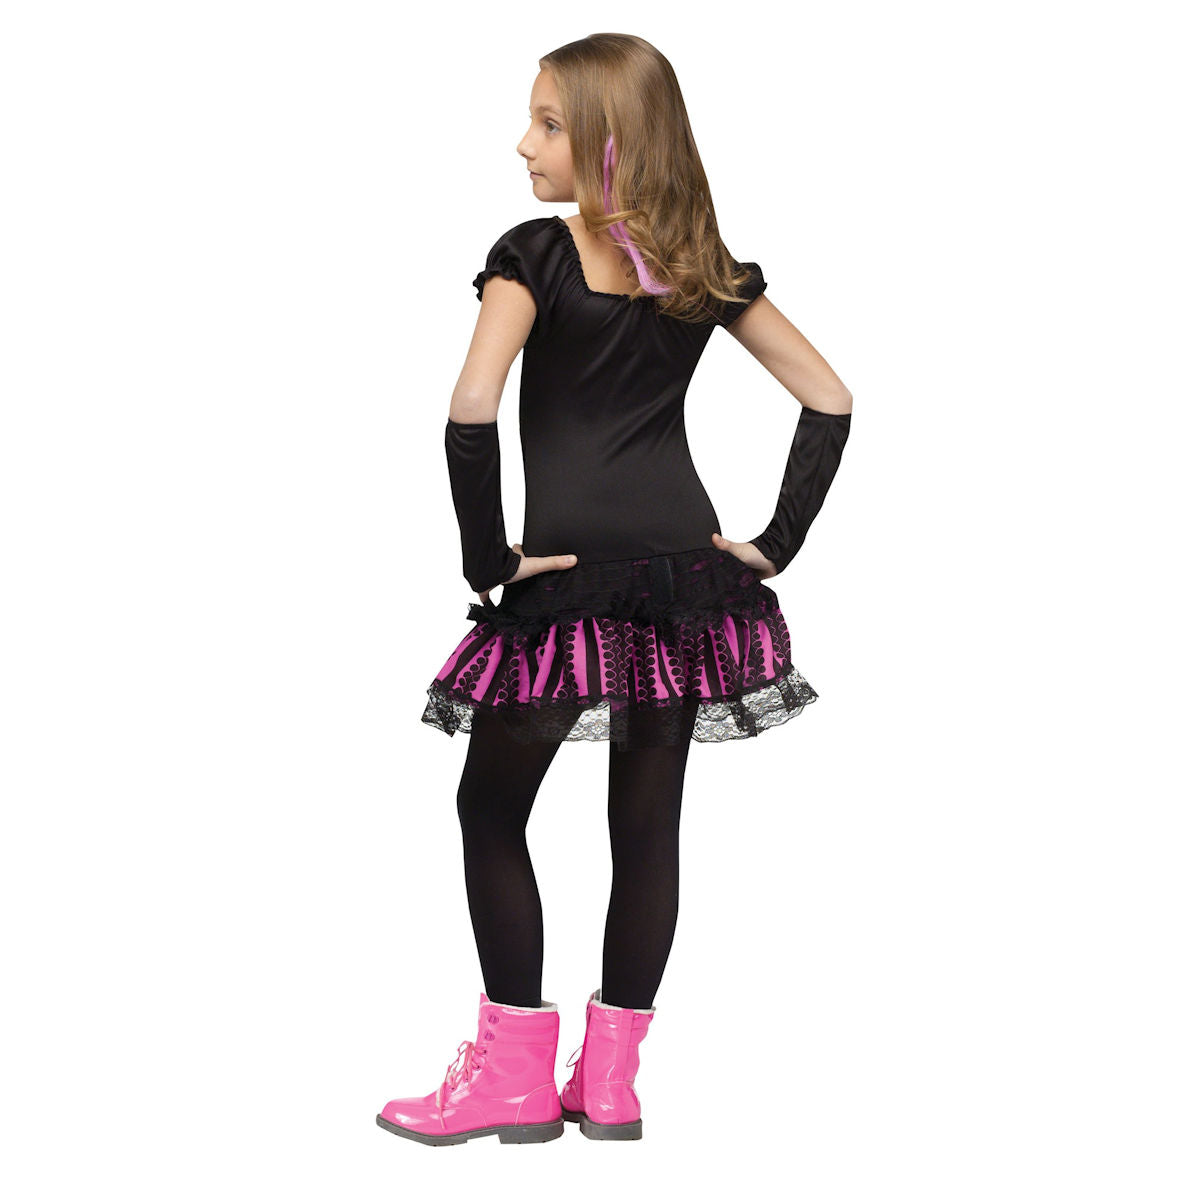 Sally Skully Girls Skelleton Halloween Fancy Dress Costume